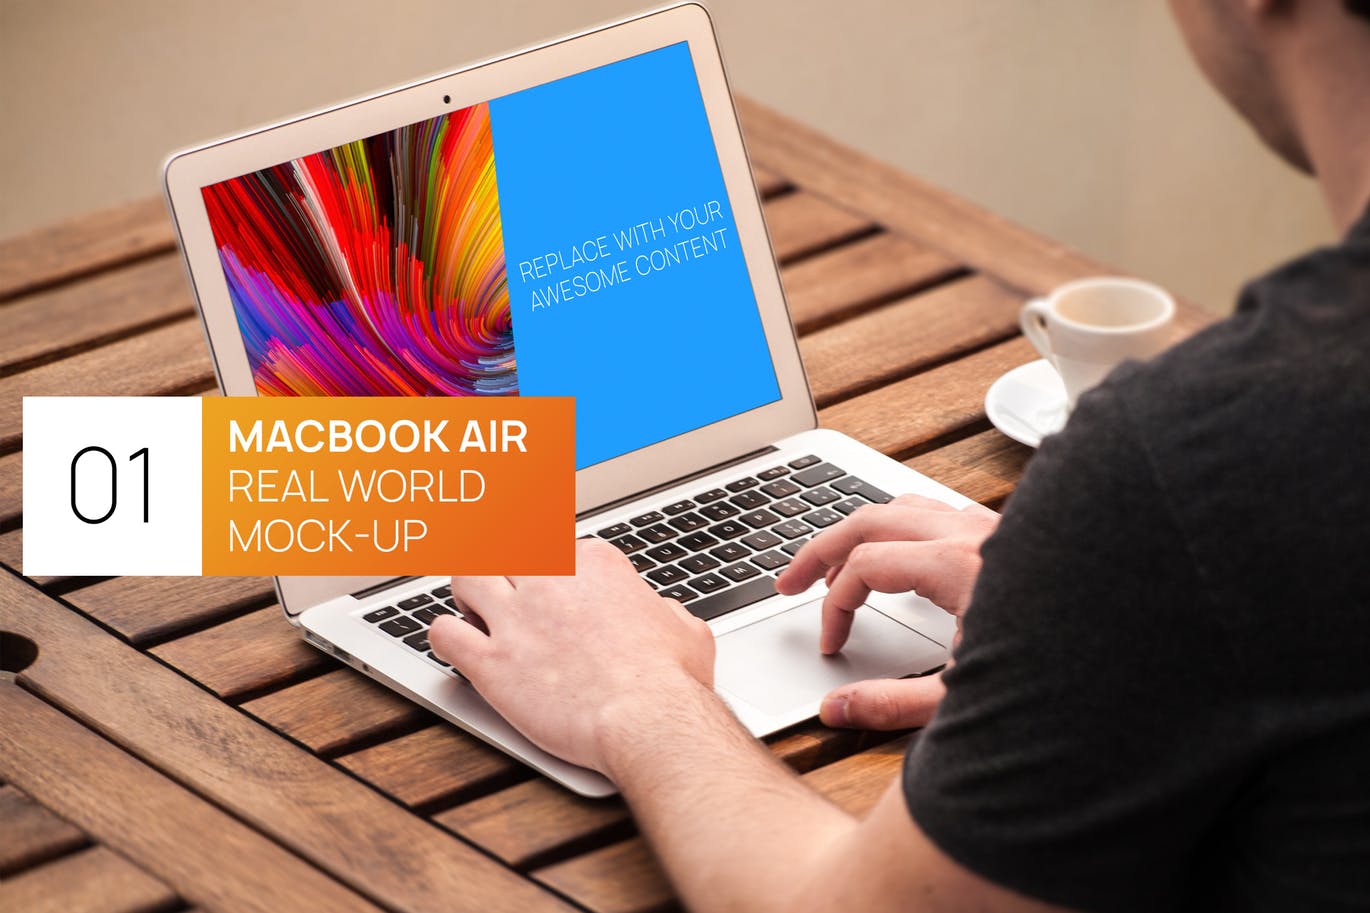 Macbook Air实景使用场景非凡图库精选样机模板v1 Person Using MacBook Air Real World Photo Mock-up插图